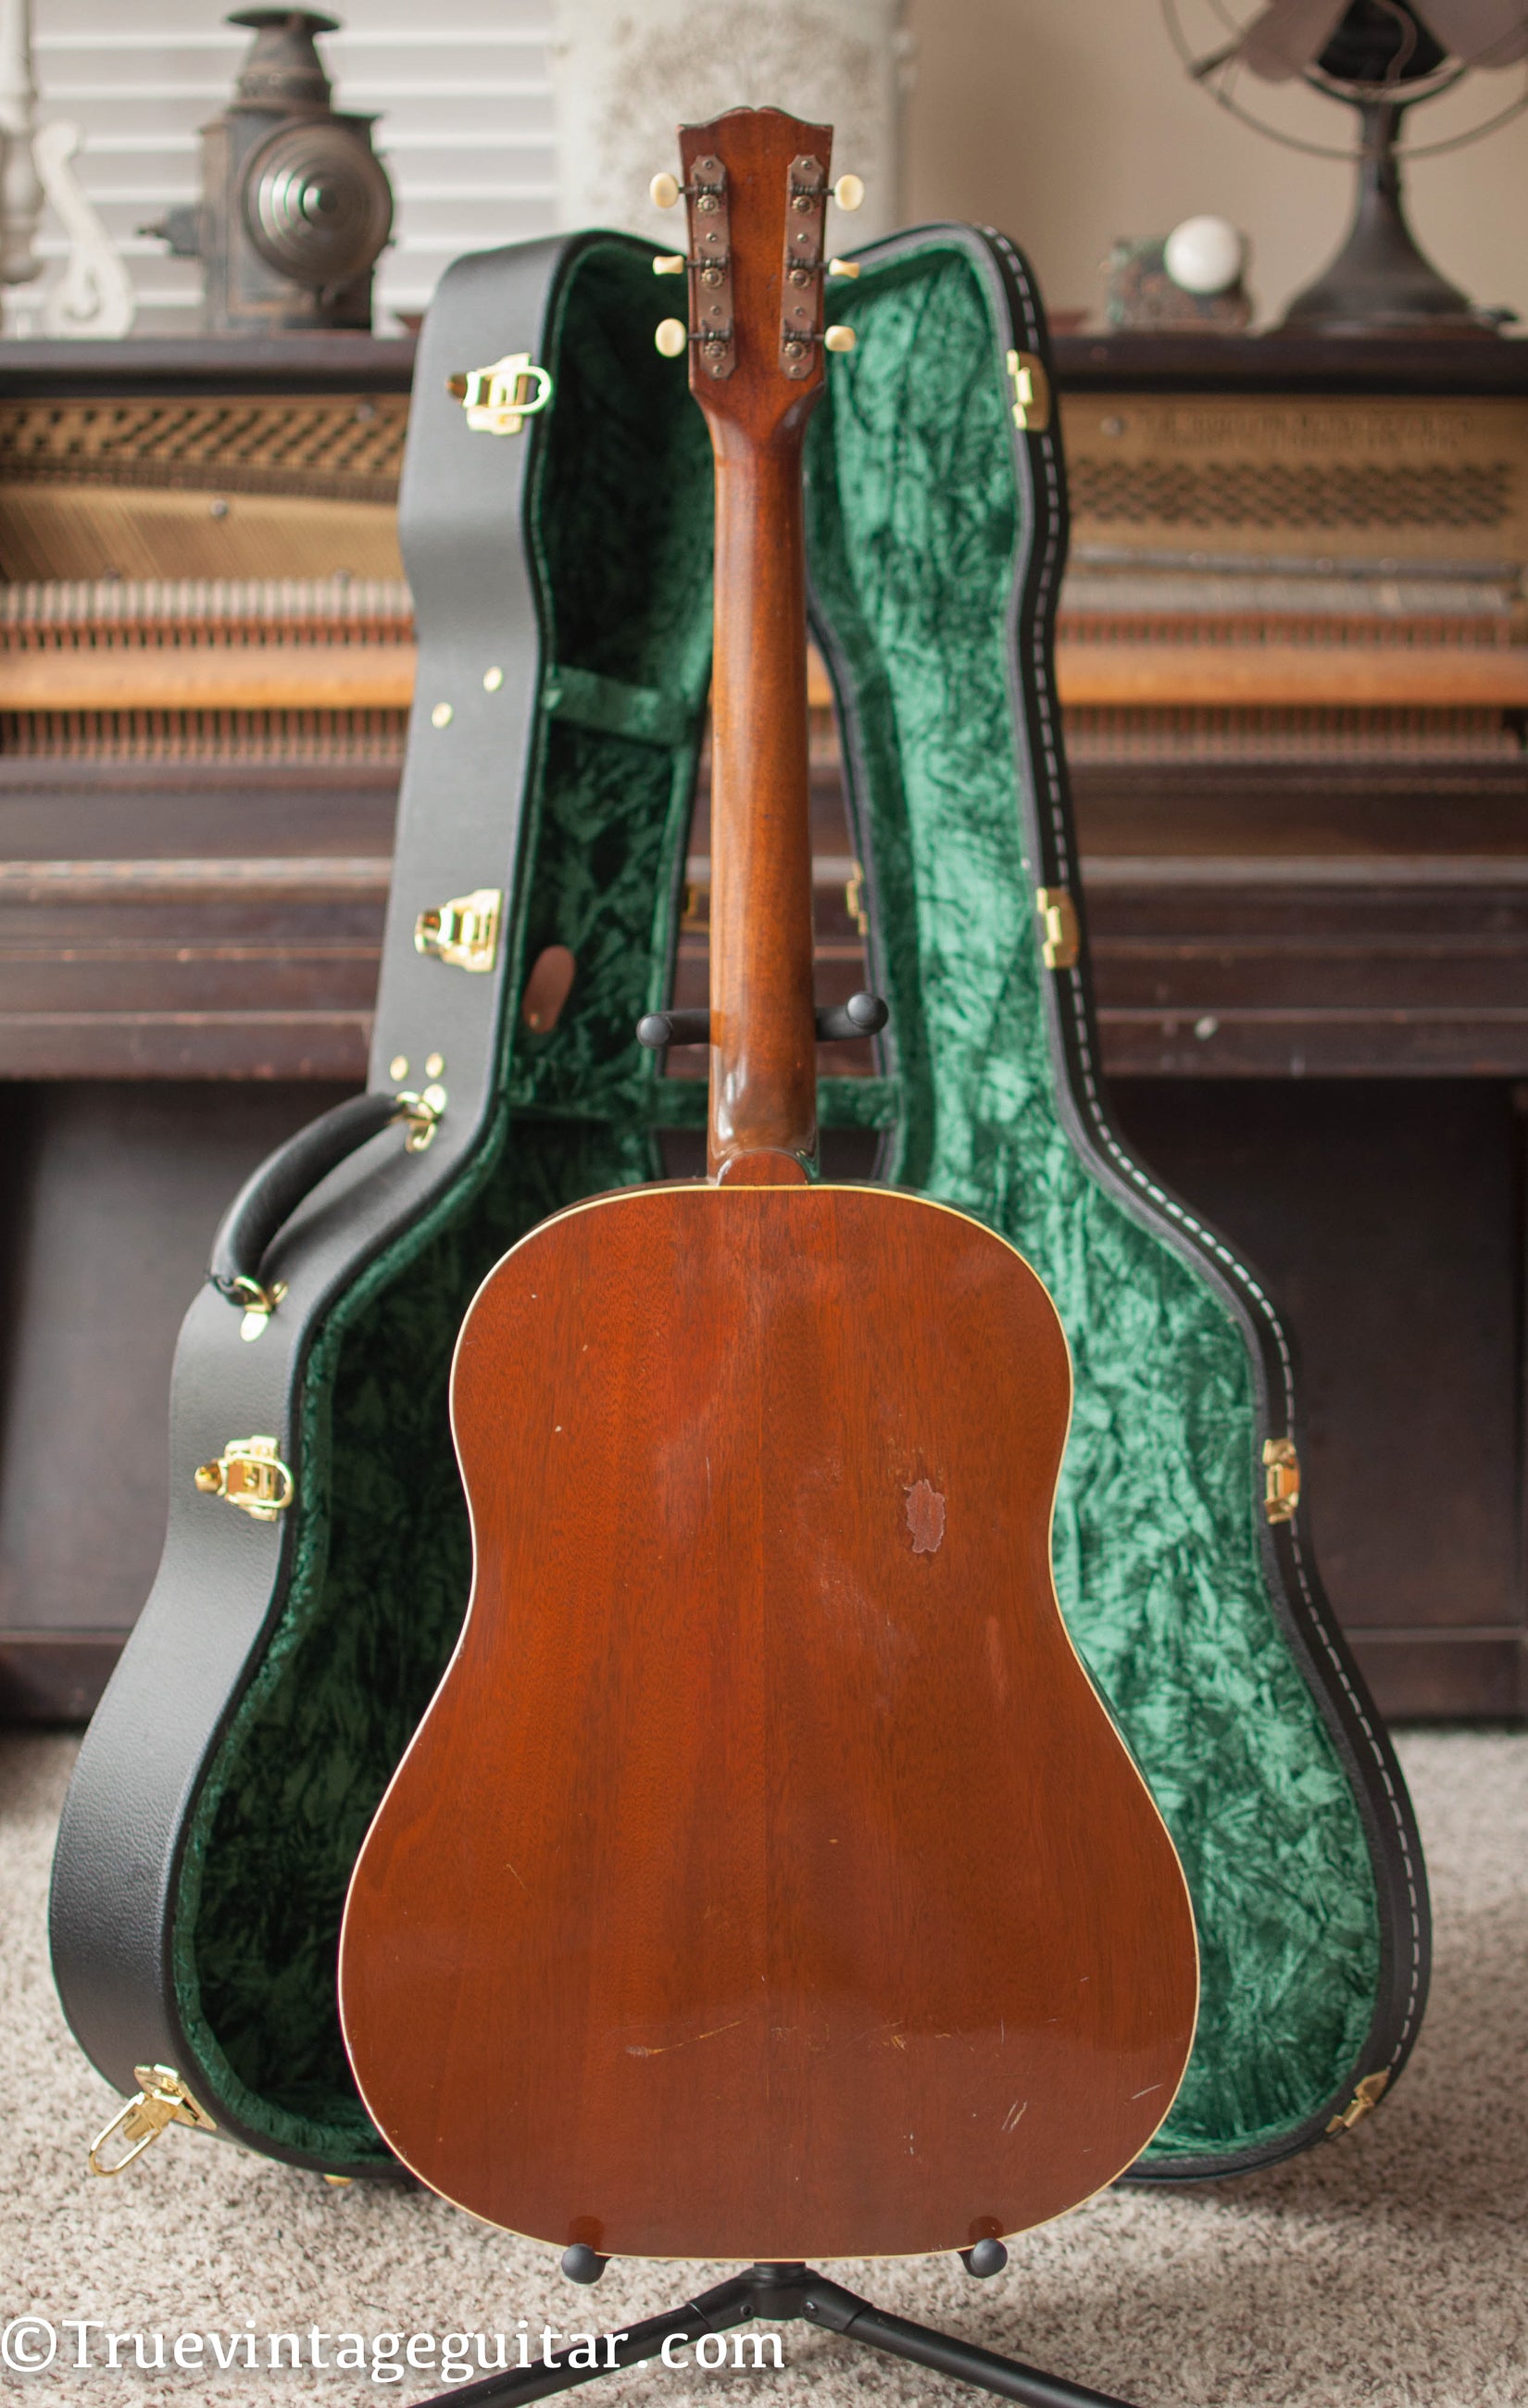 Mahogany back, vintage 1948 Gibson J-50